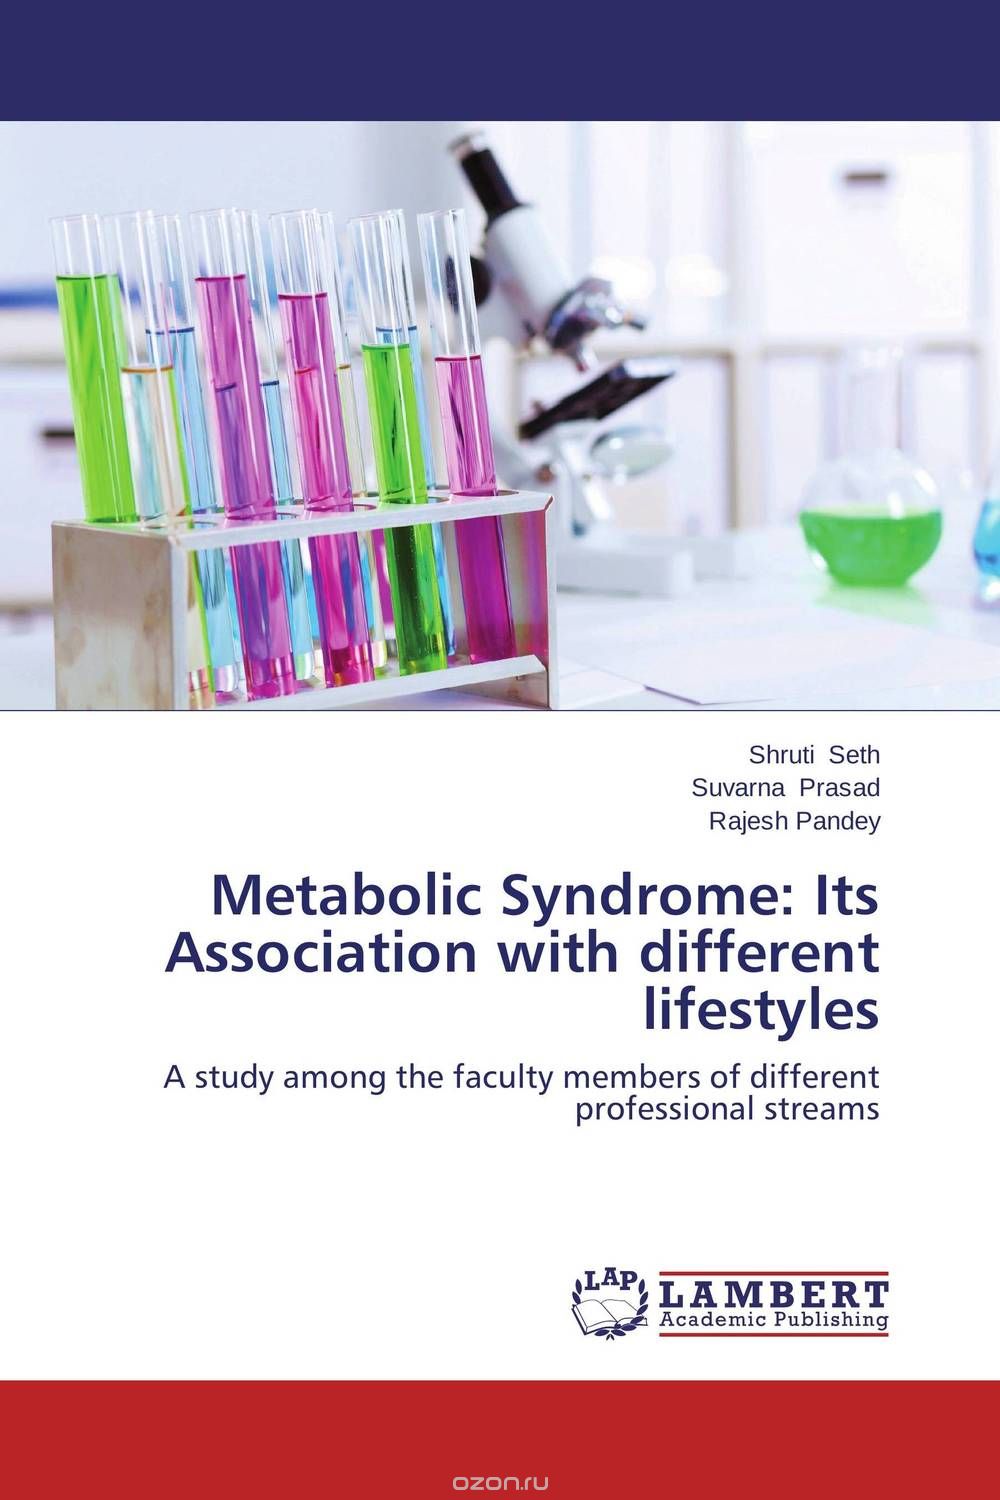 Скачать книгу "Metabolic Syndrome: Its Association with different lifestyles"